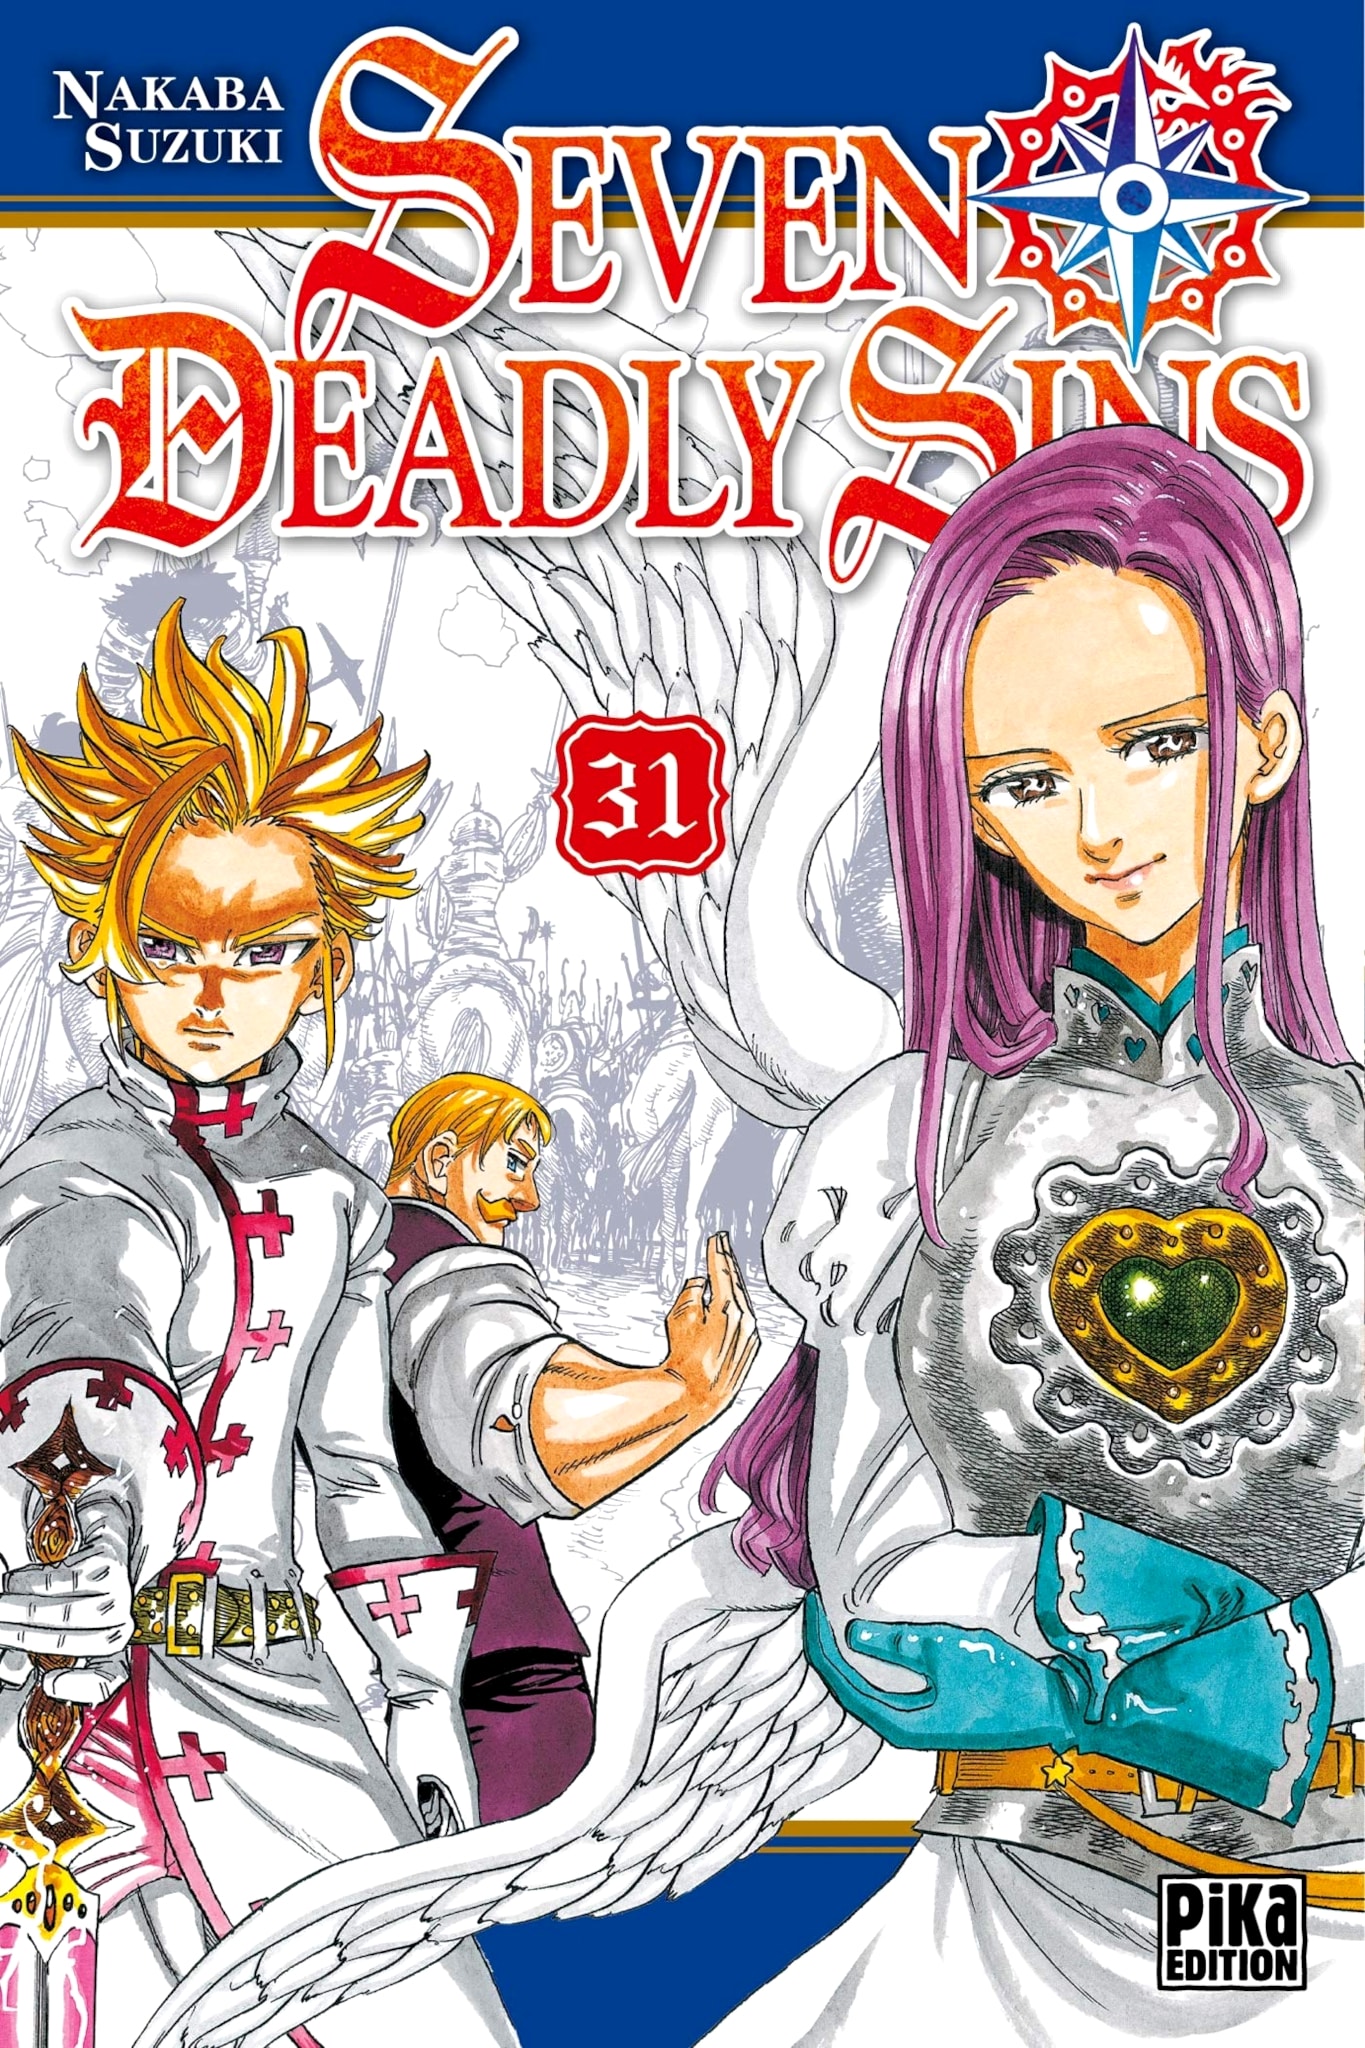 Tome 31 du manga The Seven Deadly Sins